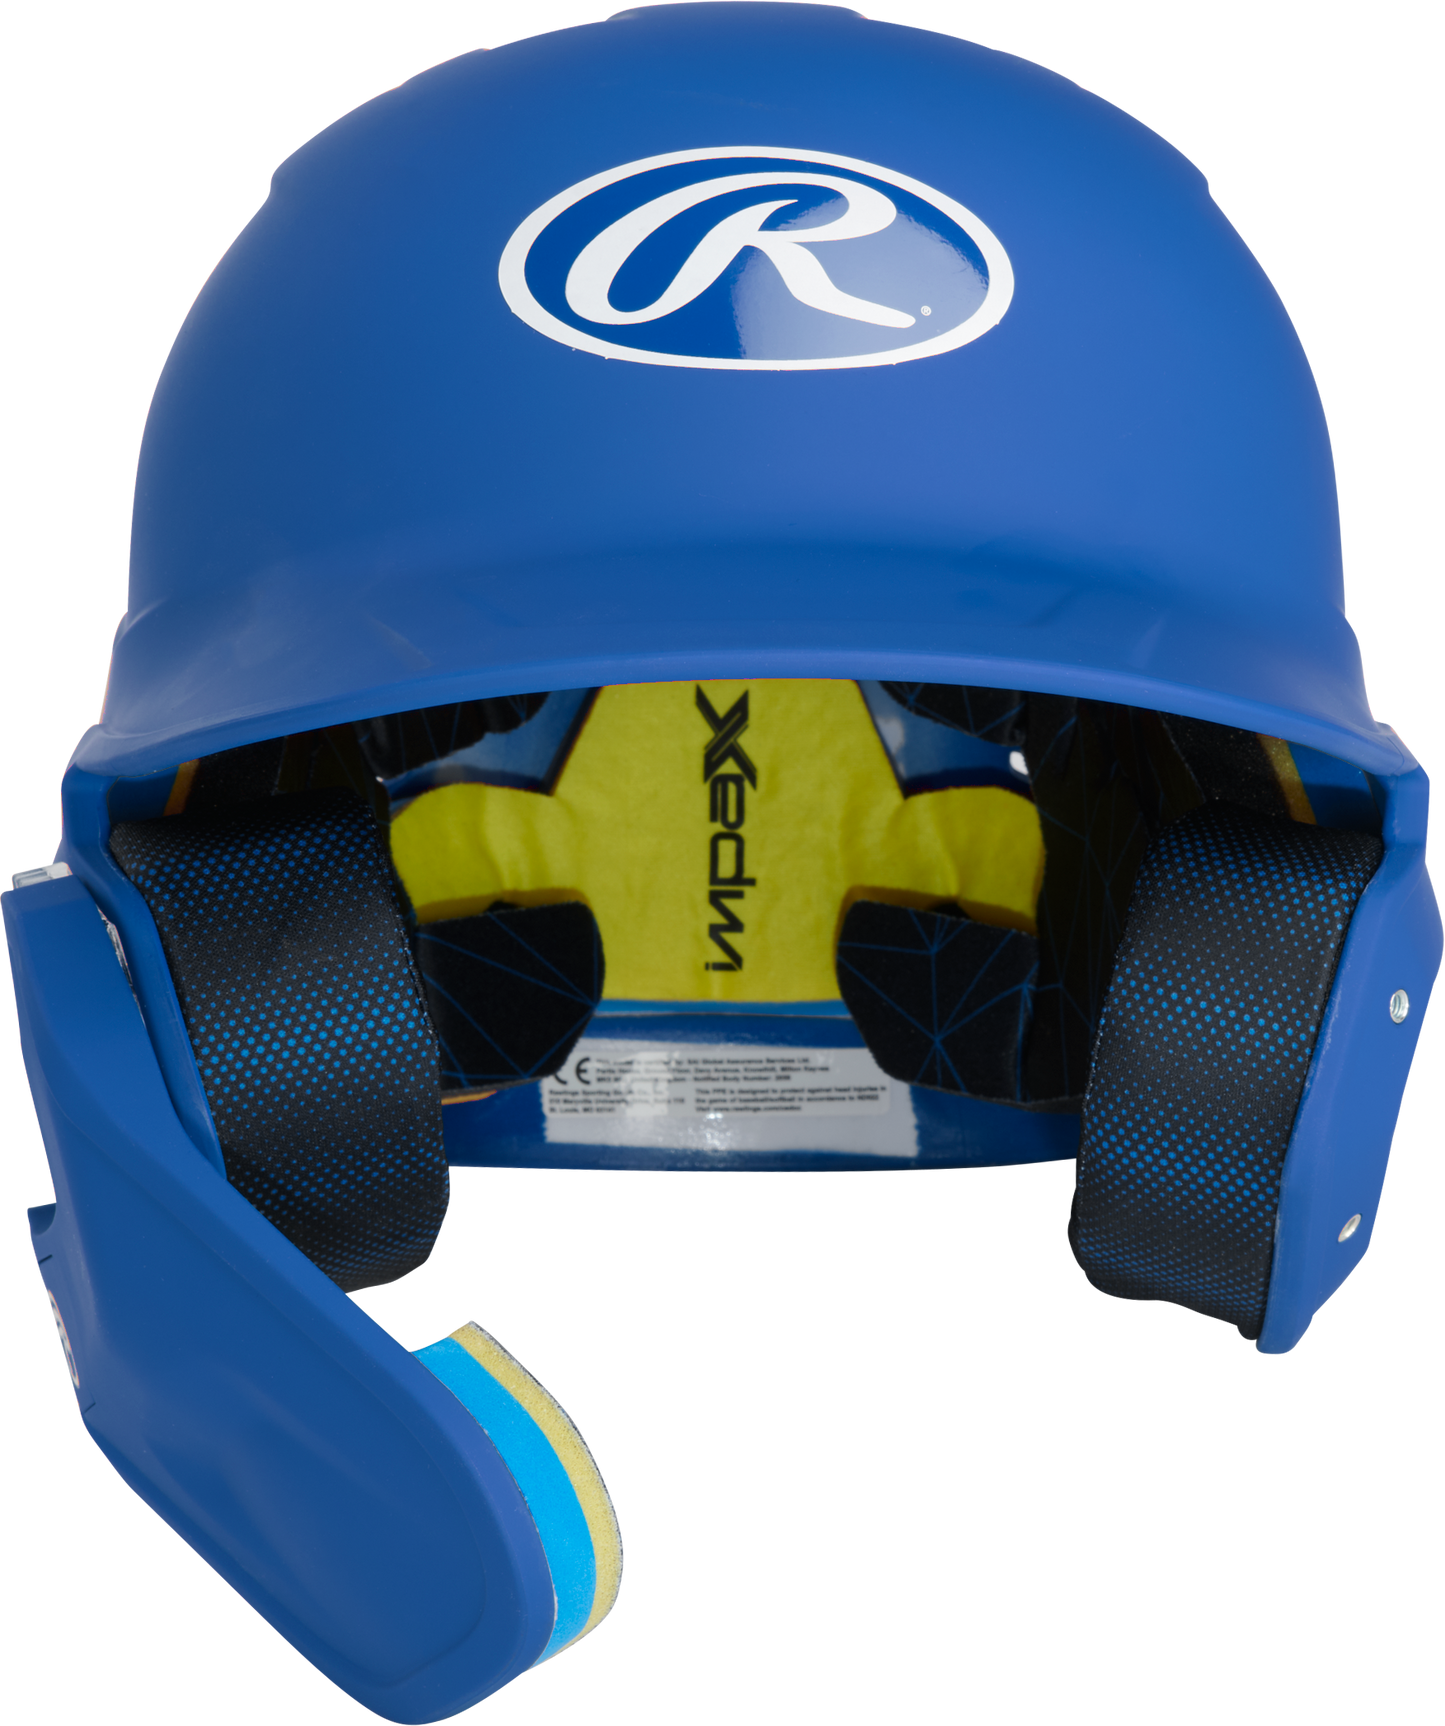 Rawlings Mach Matte Batting Helmet w/ Adjustable Exentsion